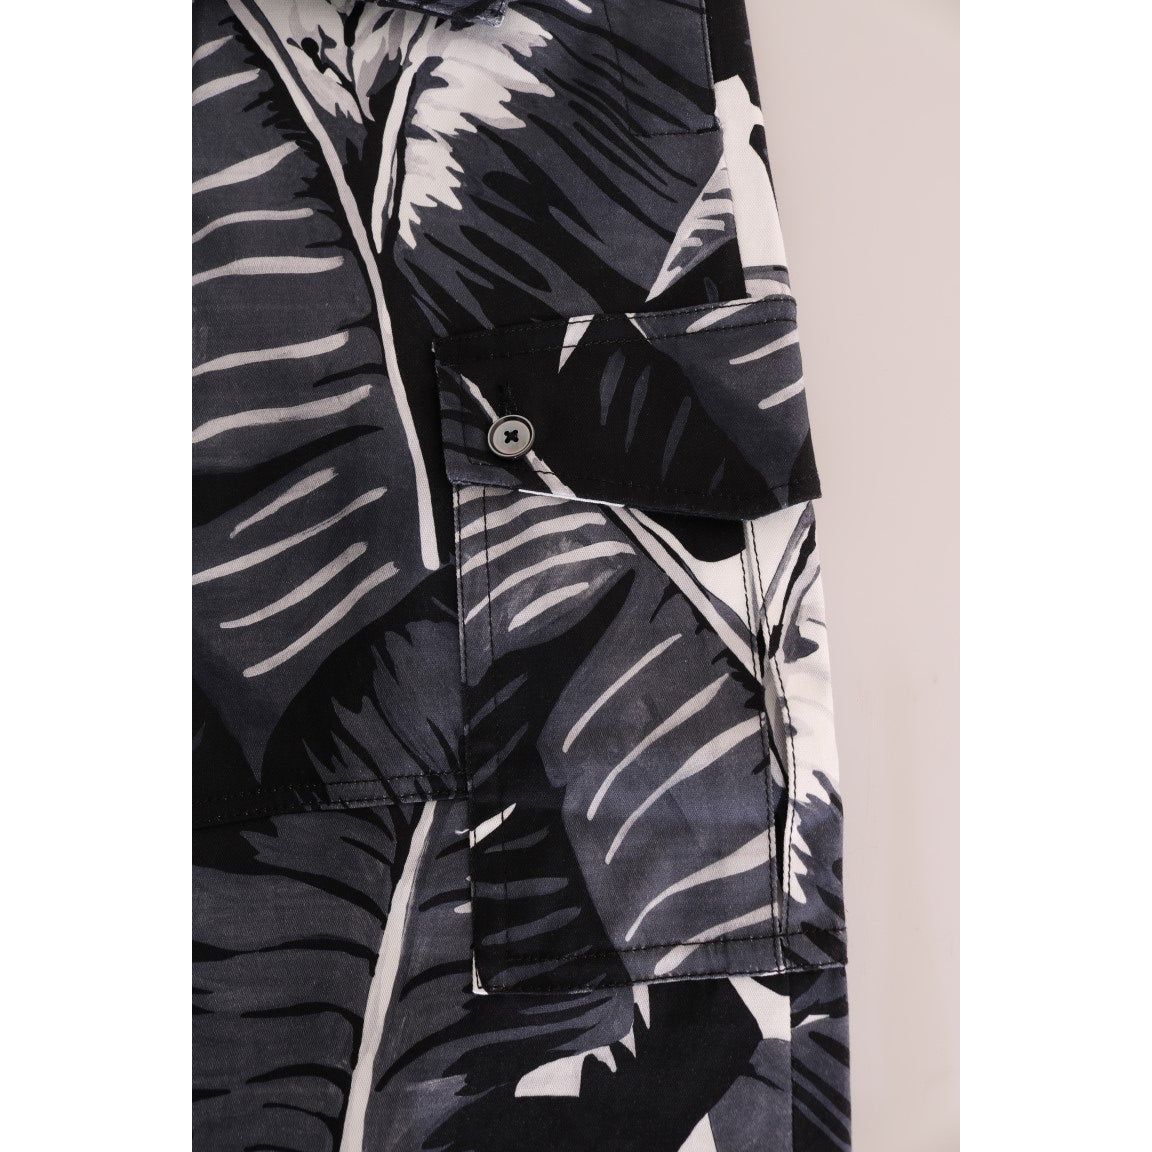 Dolce & Gabbana Elegant Capri Casual Pants in Banana Leaf Print gray-banana-leaf-cotton-pants